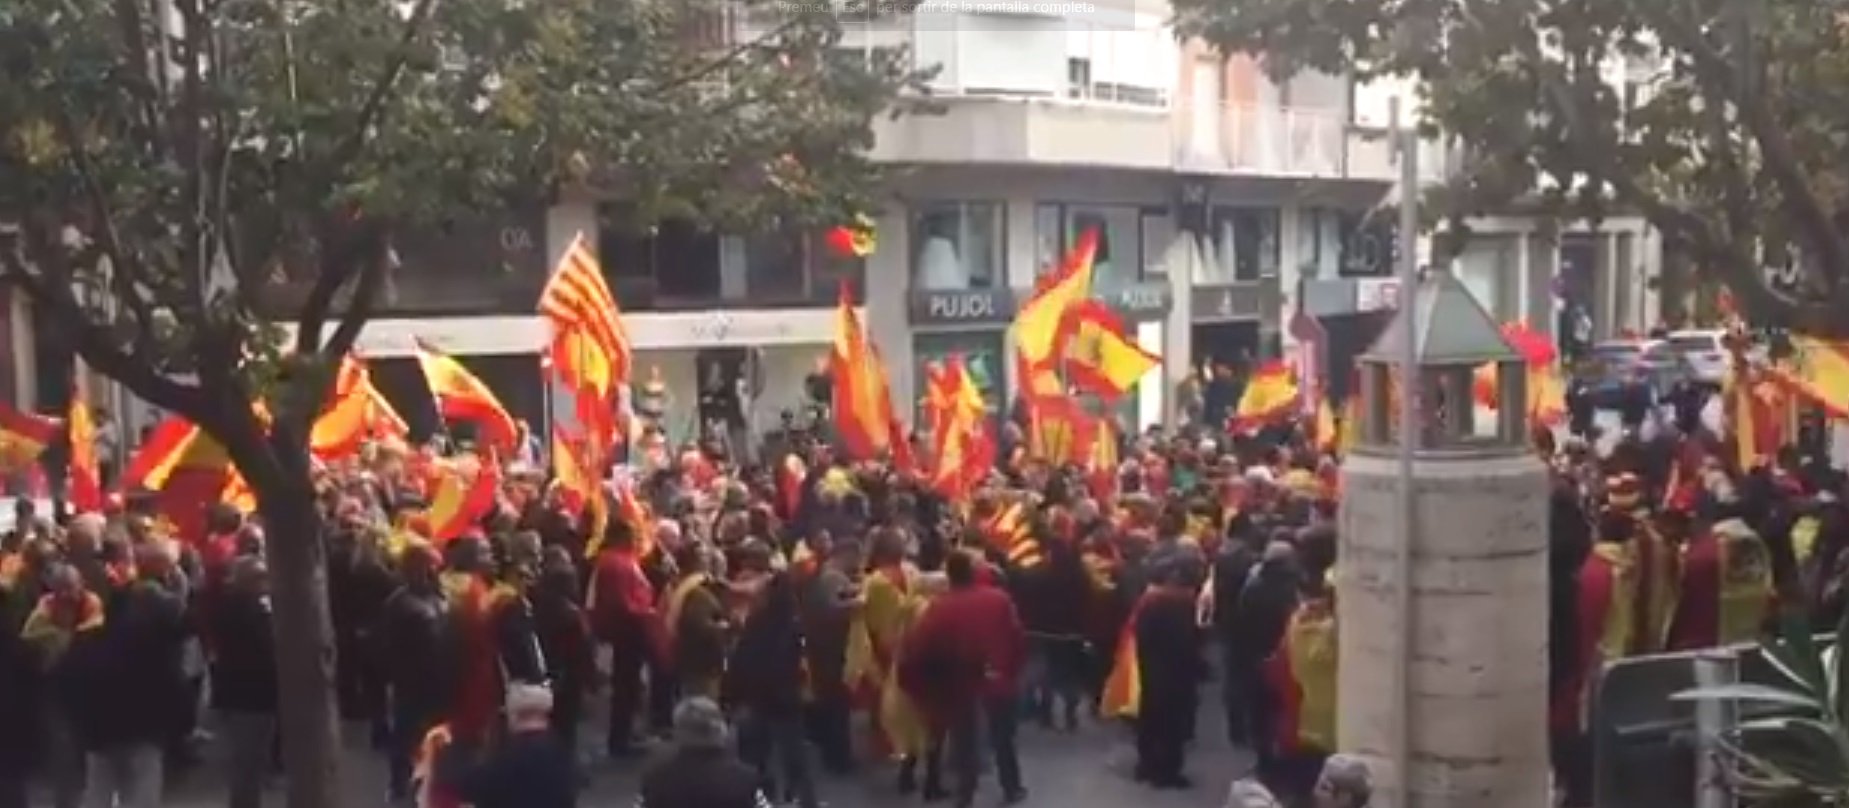 Un grup d'espanyolistes fereix un veí de Castellgalí